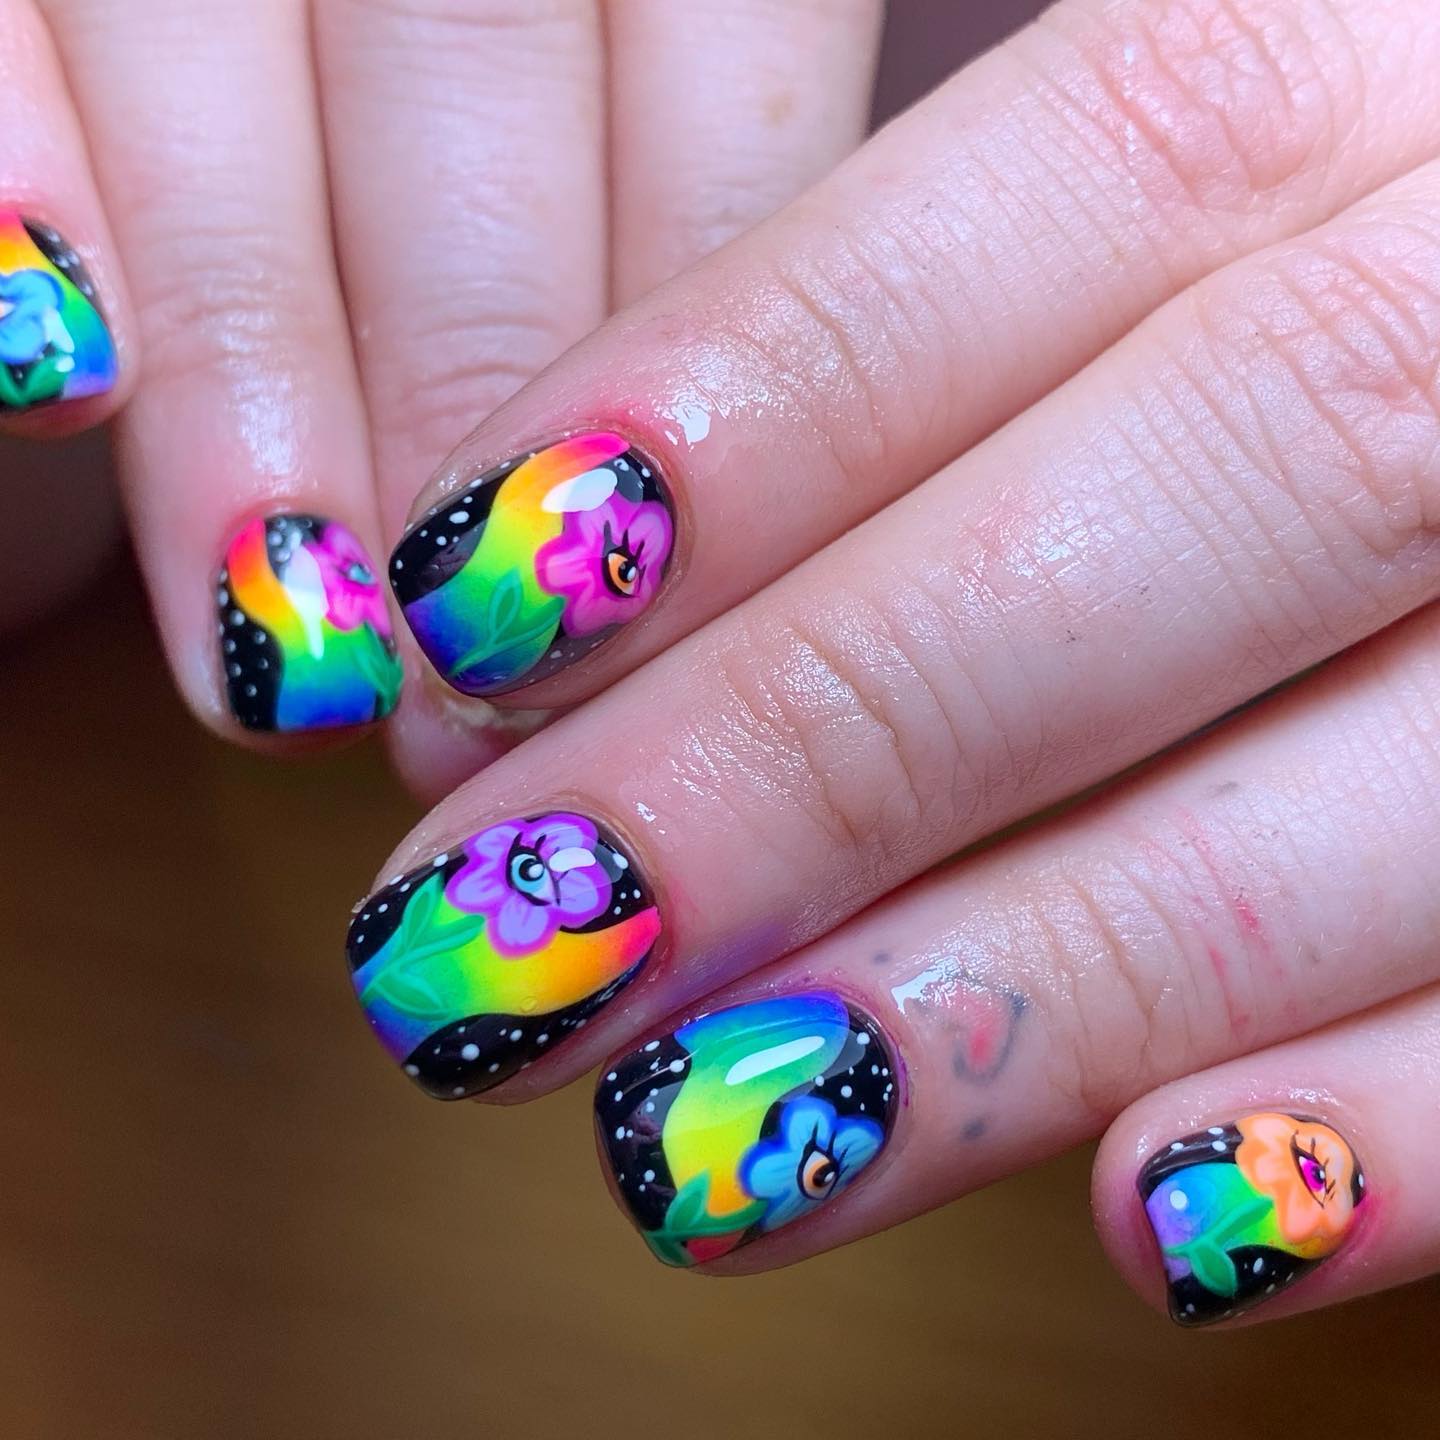 Rainbow Design on Black Nails